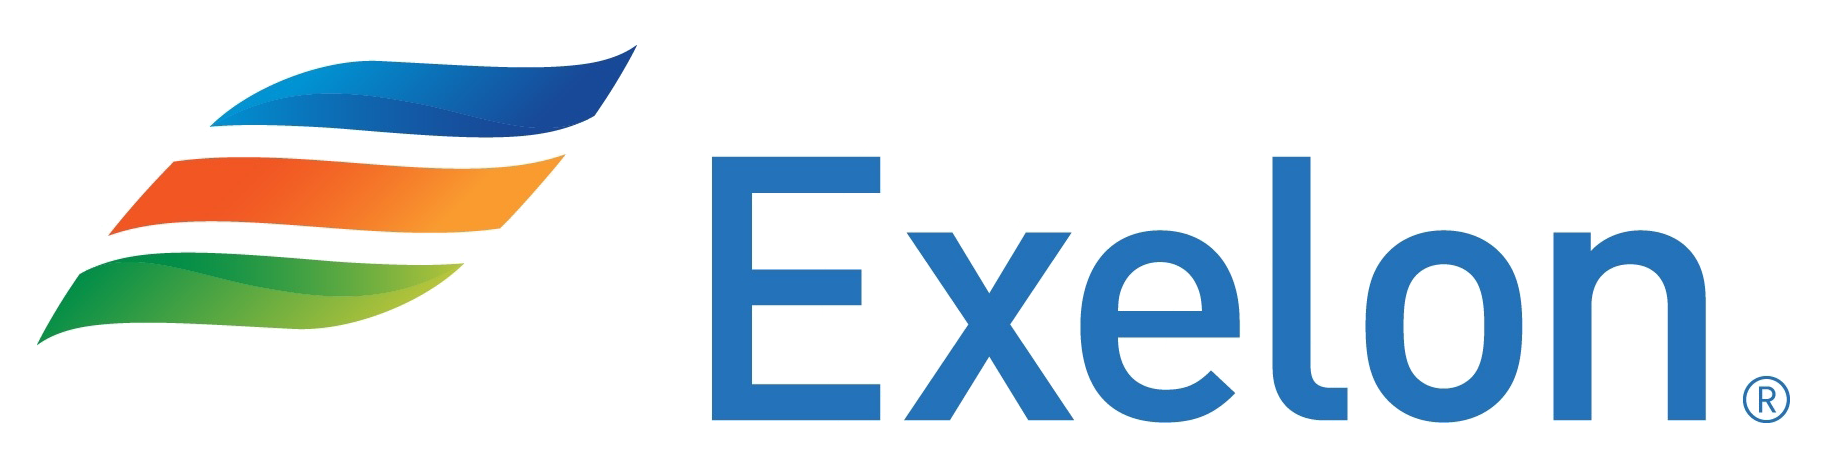 Exelon logo.png